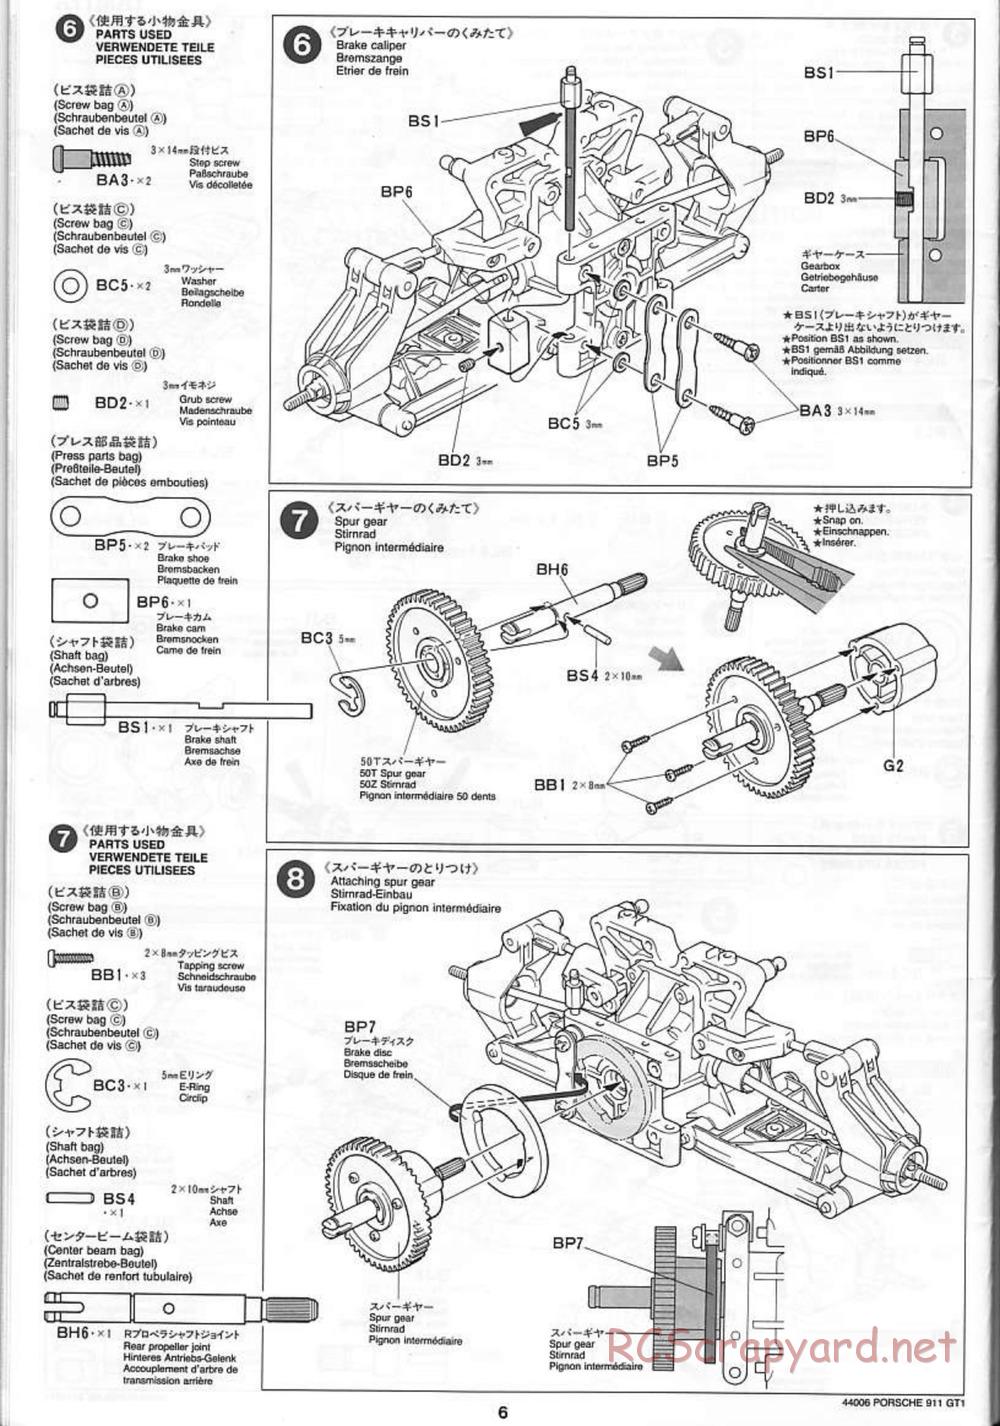 Tamiya - Porsche 911 GT1 - TGX Mk.1 Chassis - Manual - Page 6